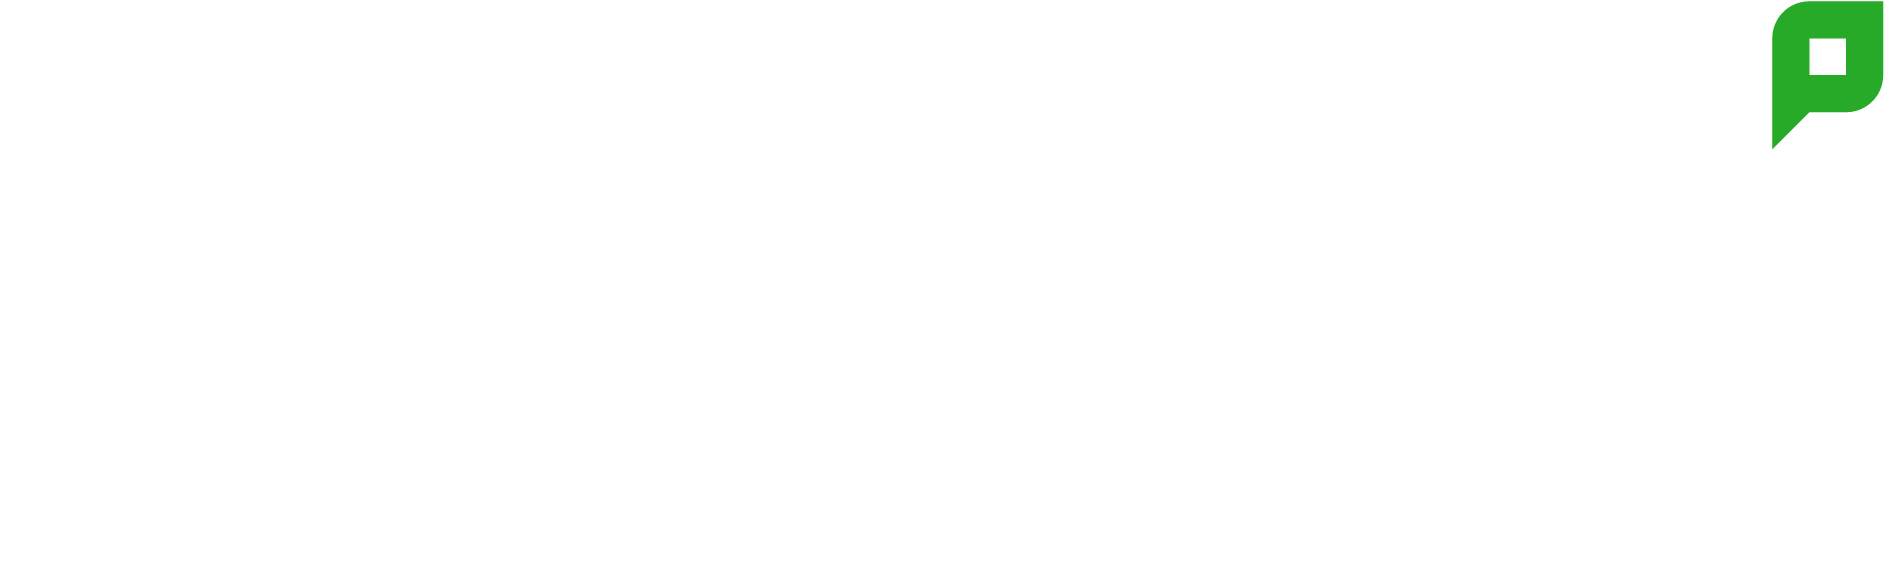 PaperCut-Reseller-Cobranded-RGB